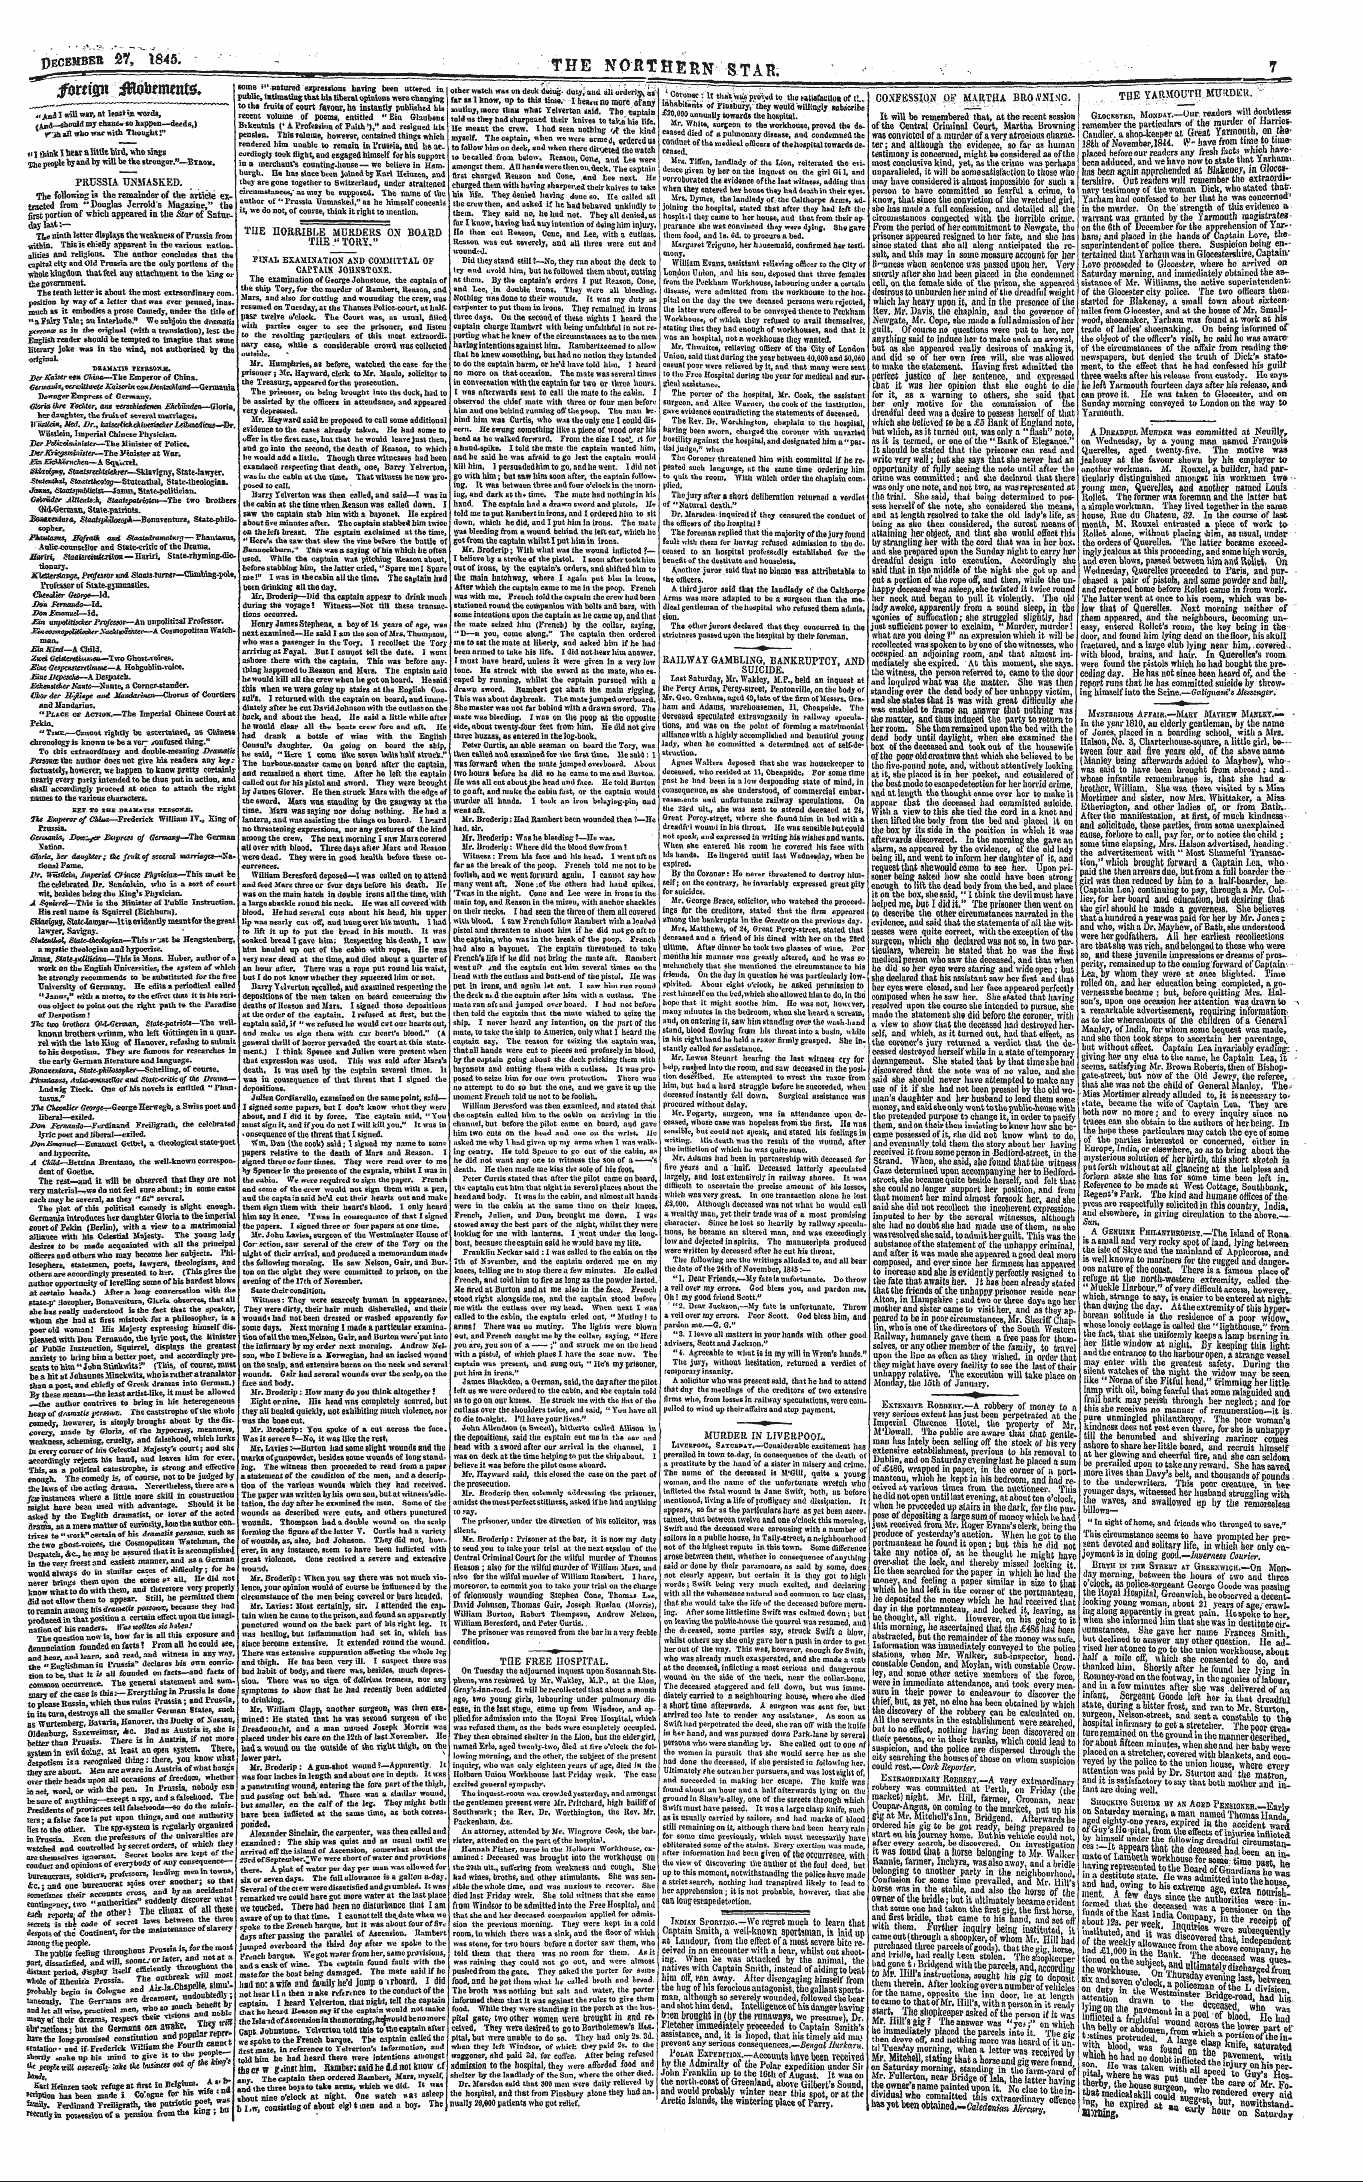 Northern Star (1837-1852): jS F Y, 2nd edition - The Yarmouth Murder. > Glockbtkp. , Mond...